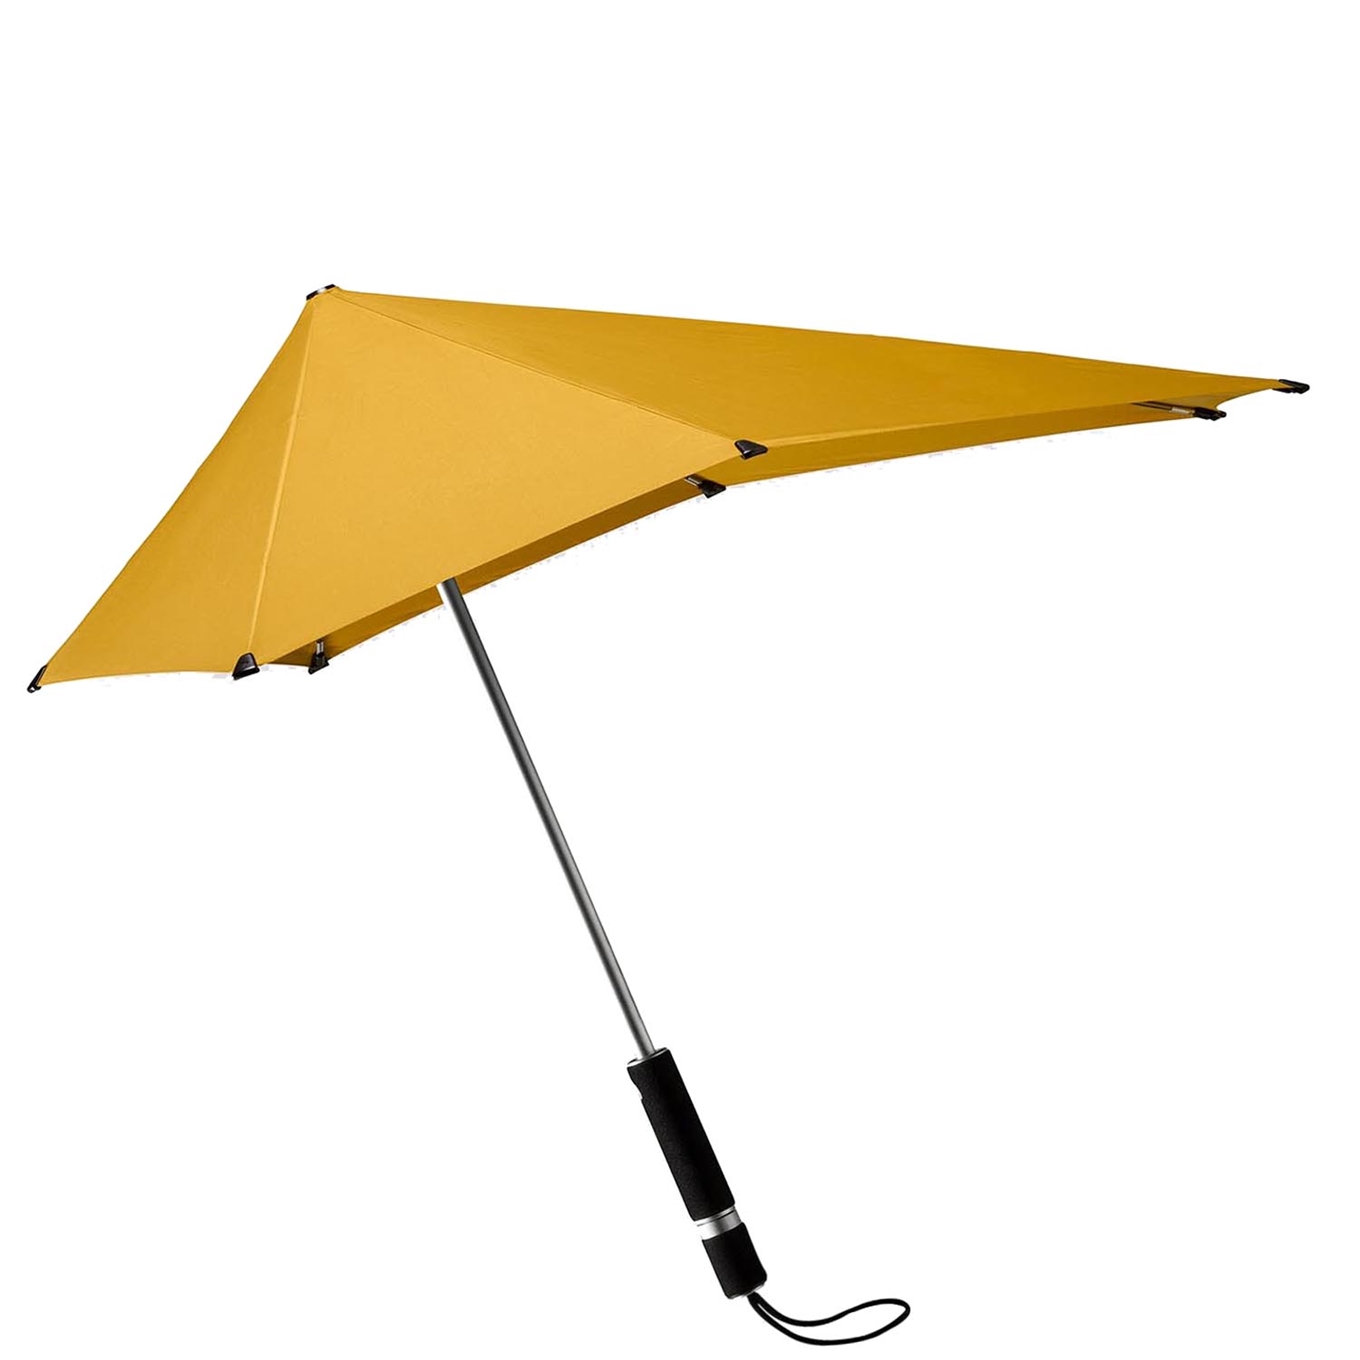 Senz Original Stick Stormparaplu daylily yellow (Storm) Paraplu